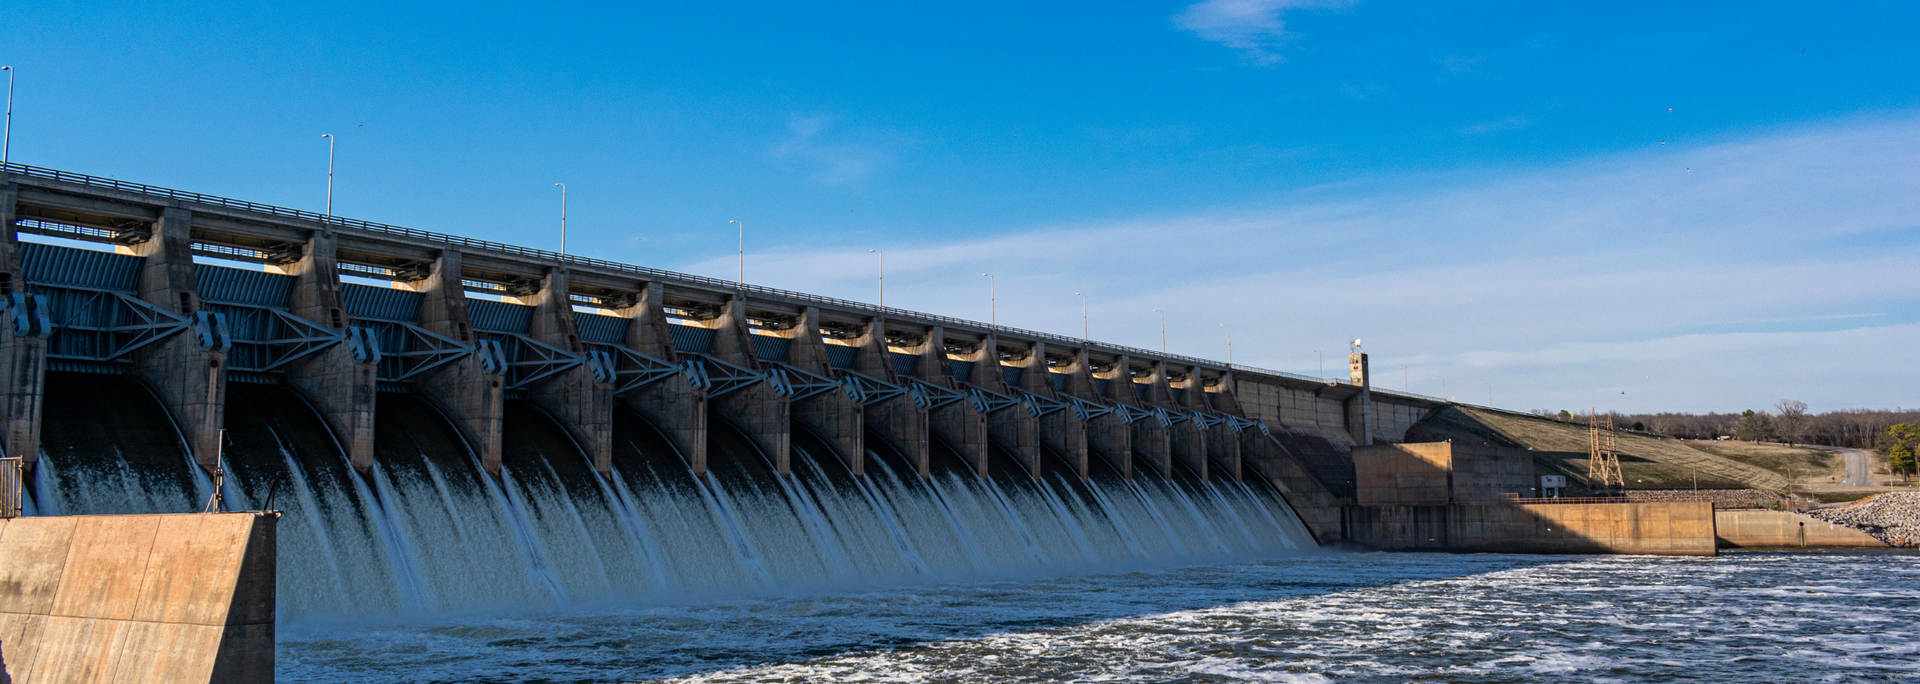 A Hydroelectric Dam